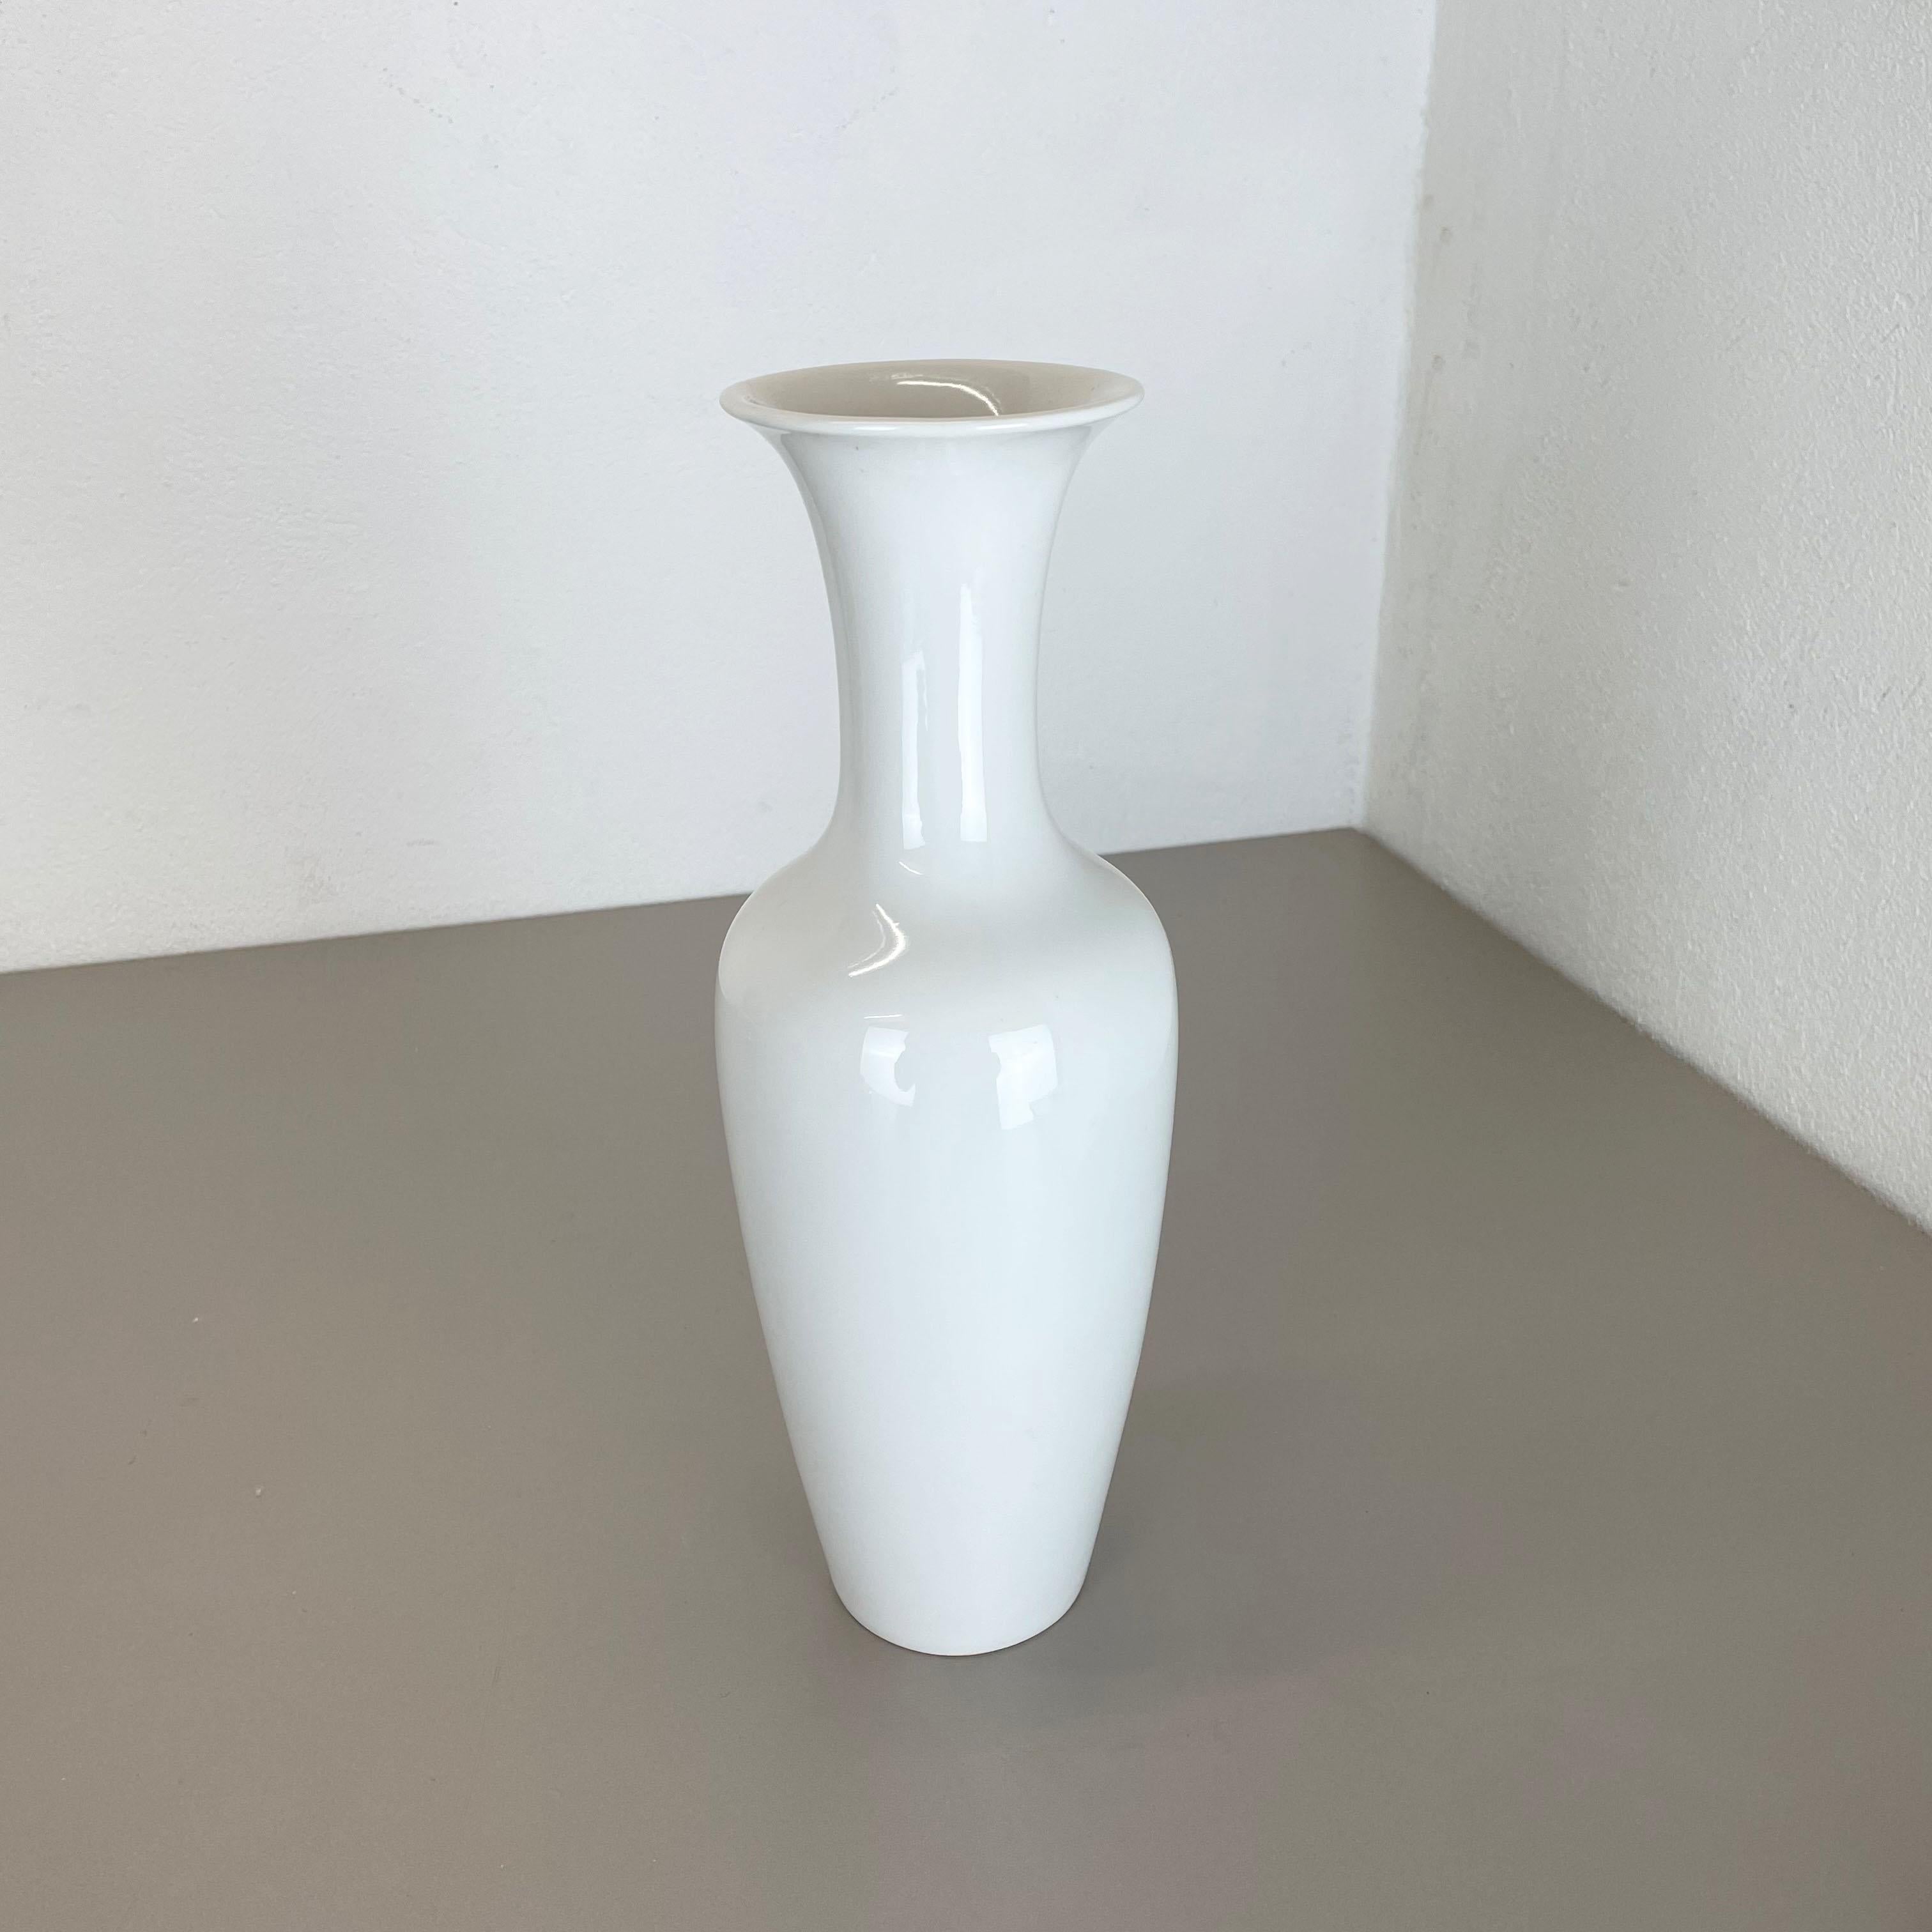 20th Century Small Op Art Vase Porcelain German Vase by KPM Berlin Ceramics Germany 1960 For Sale